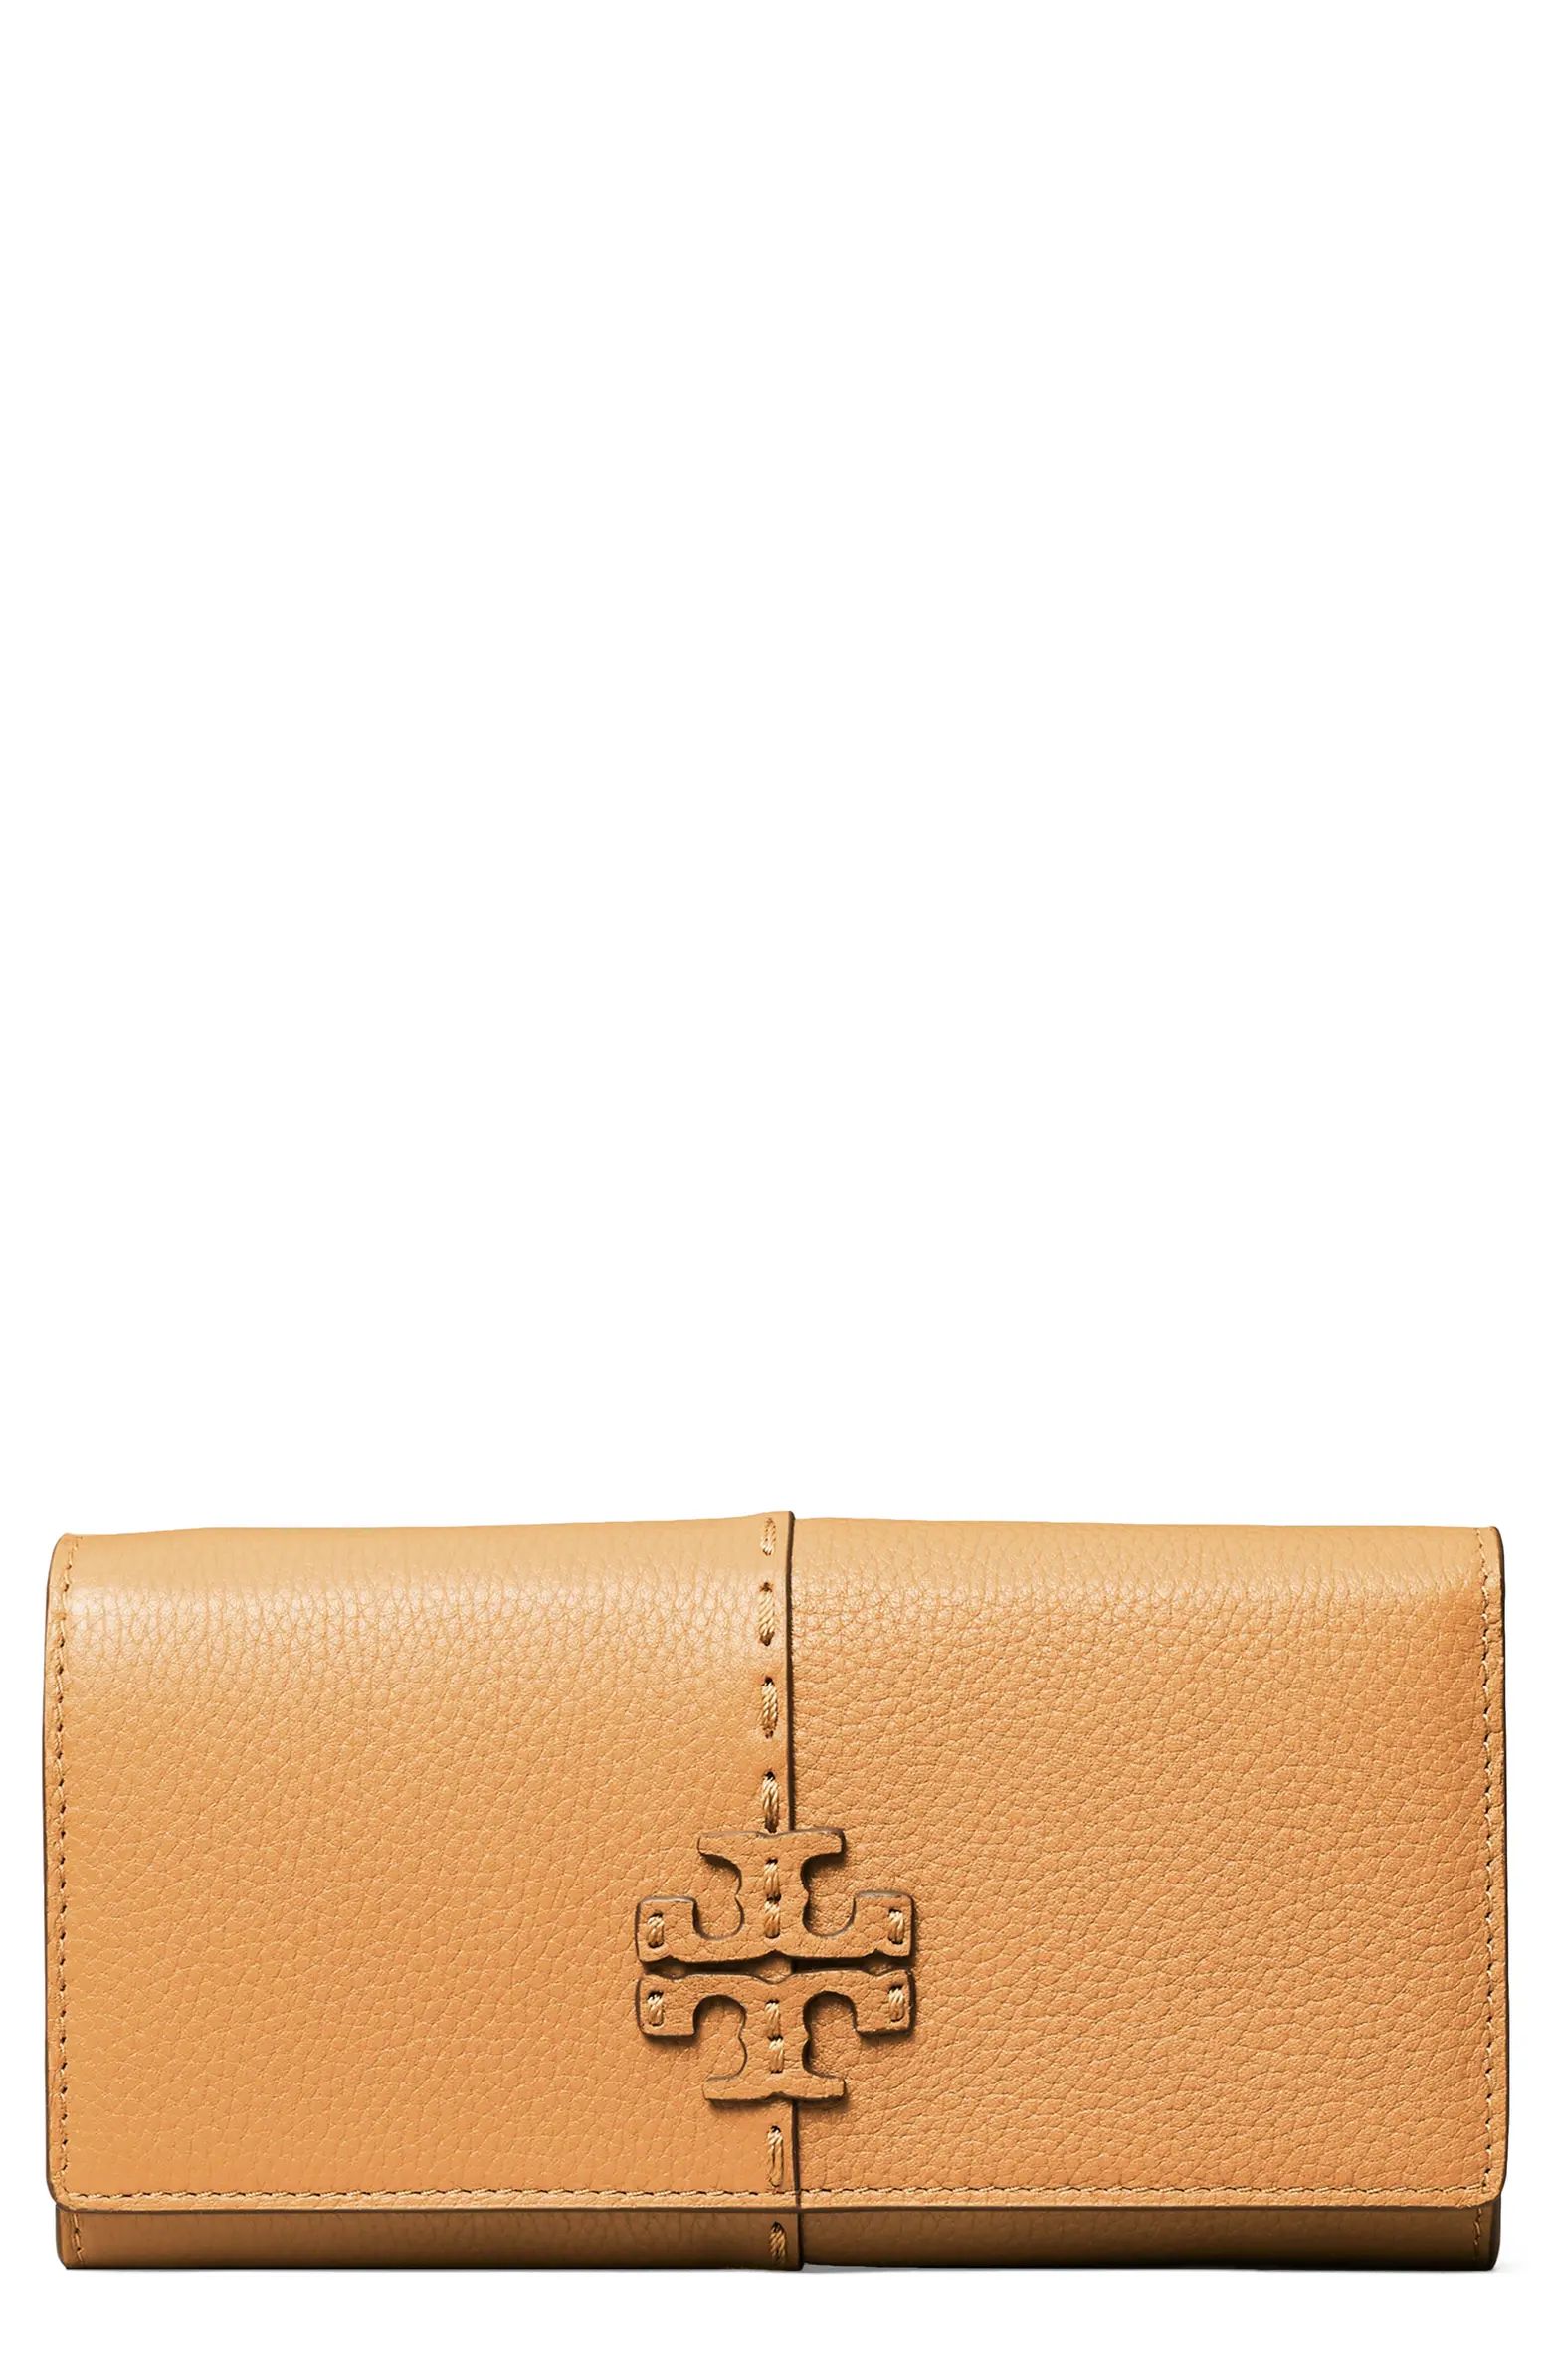 McGraw Leather Envelope Wallet | Nordstrom